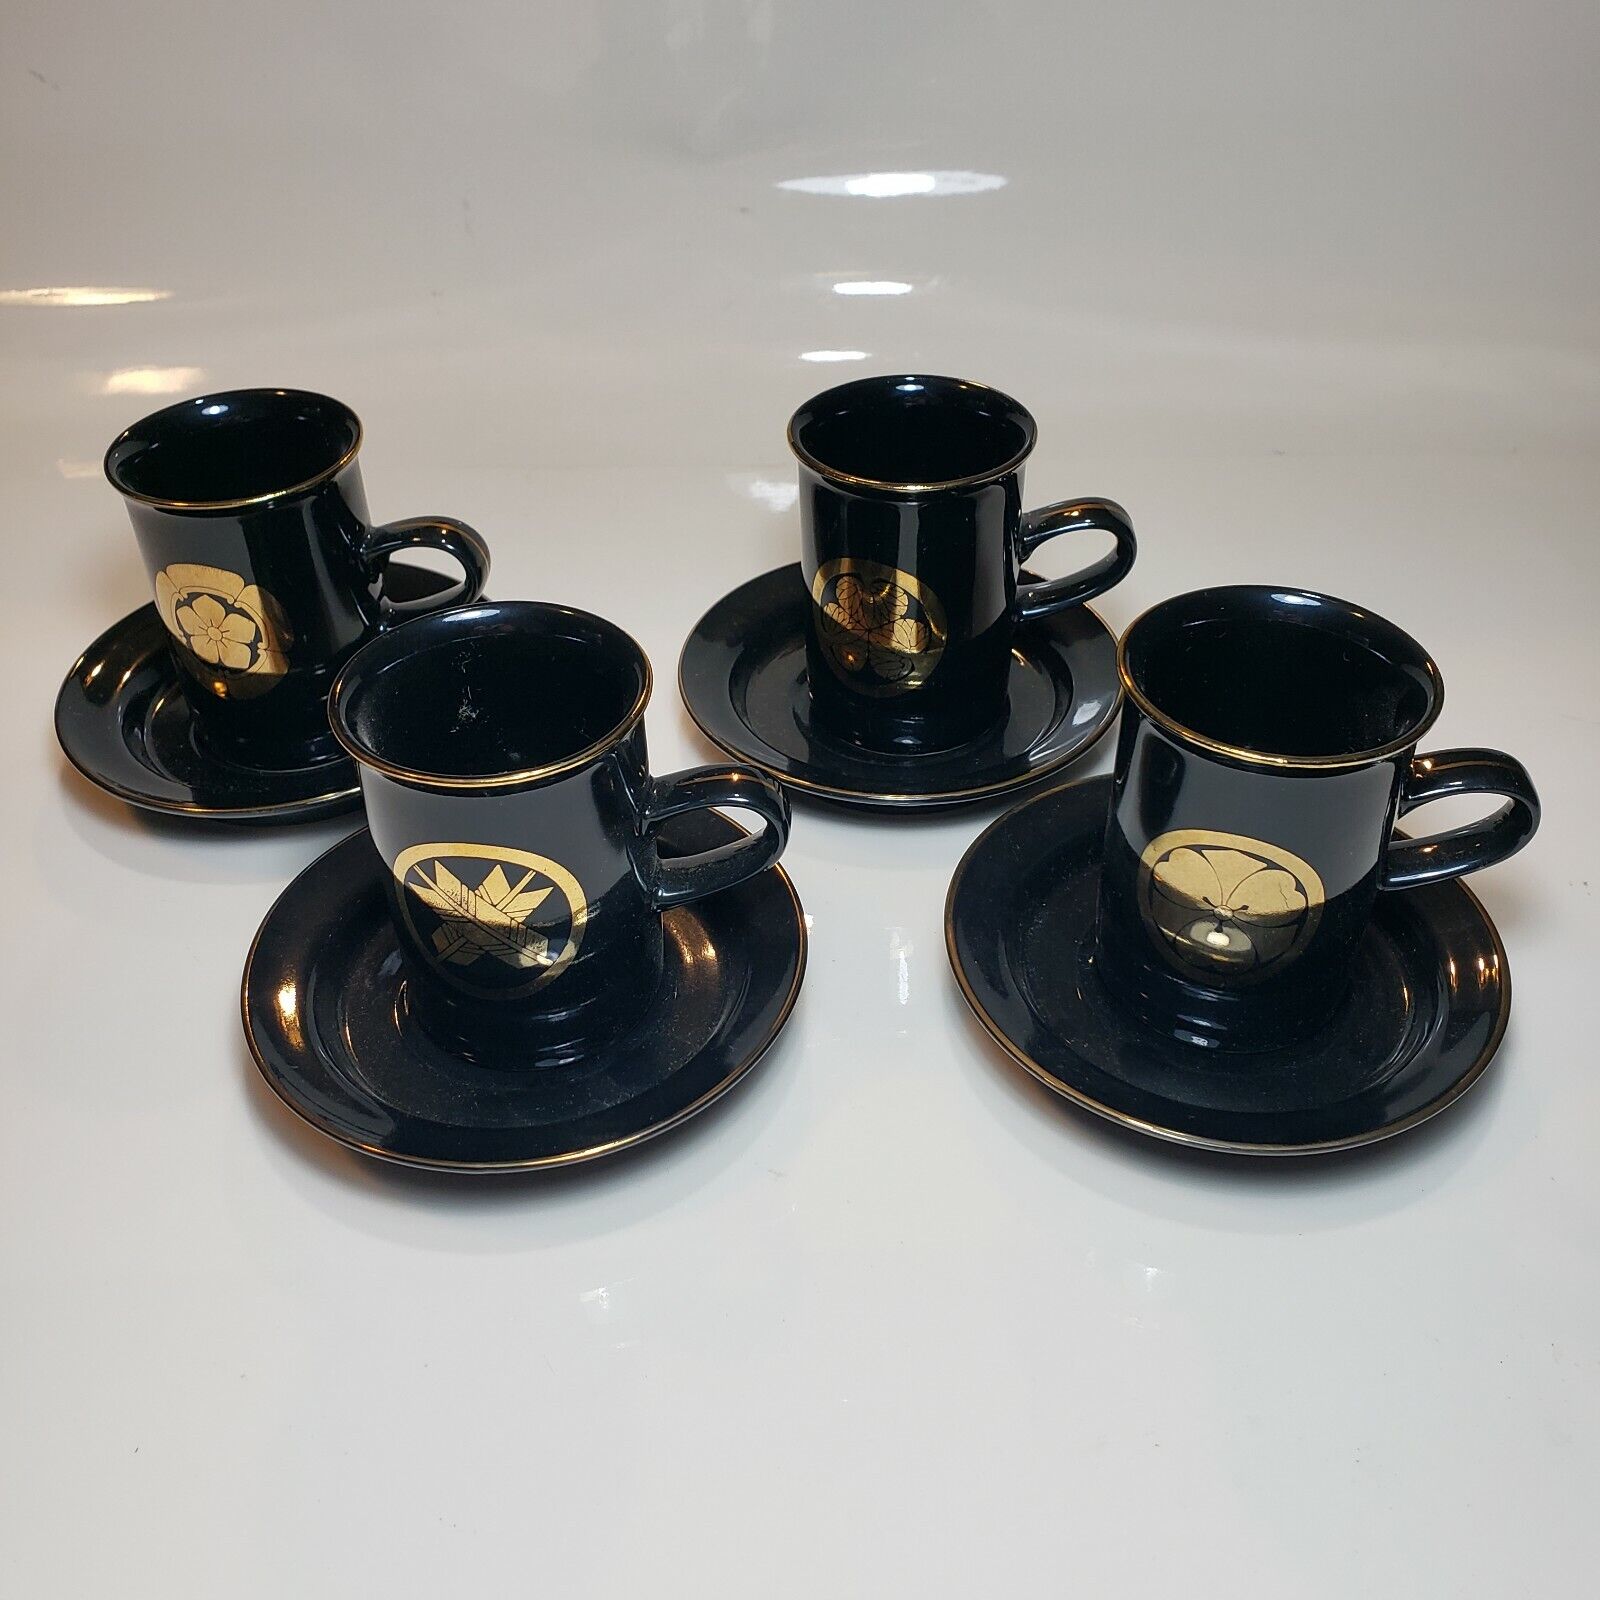 HORCHOW CHINA JAPAN BLACK GOLD TRIM 8 PIECE TEA CUPS & SAUCERS 